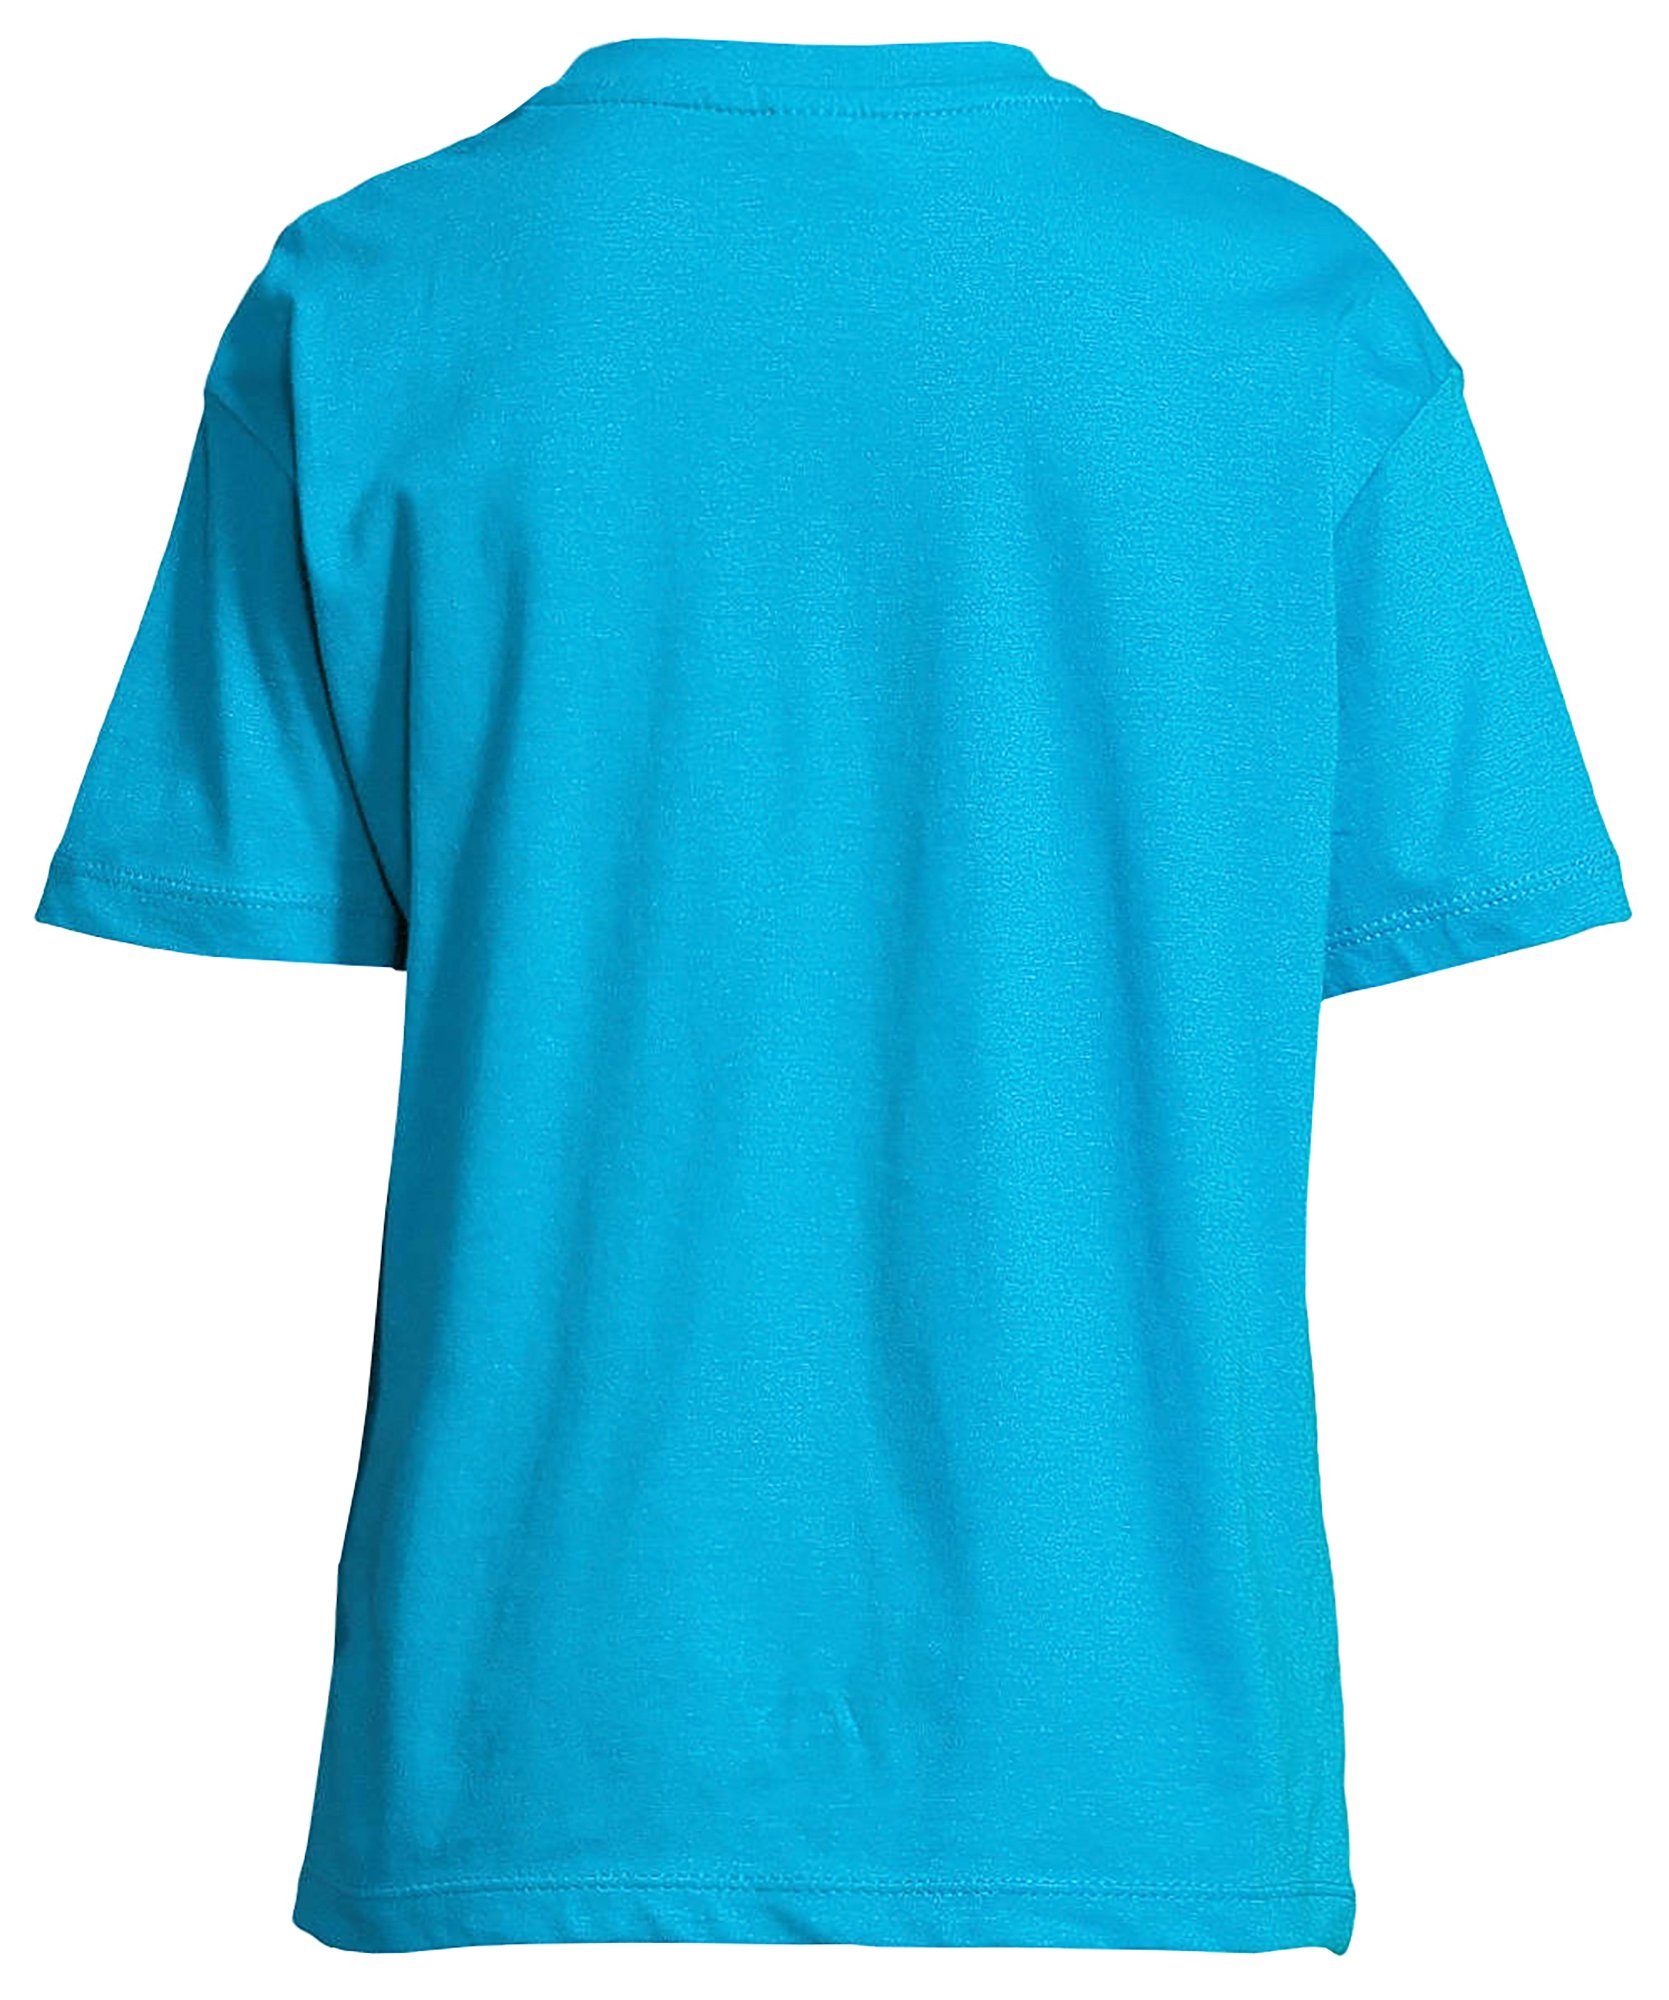 bedruckt i251 Baumwollshirt cartoon Pferde - MyDesign24 Kinder Pferde blau aqua Shirt 2 Aufdruck, Print mit T-Shirt